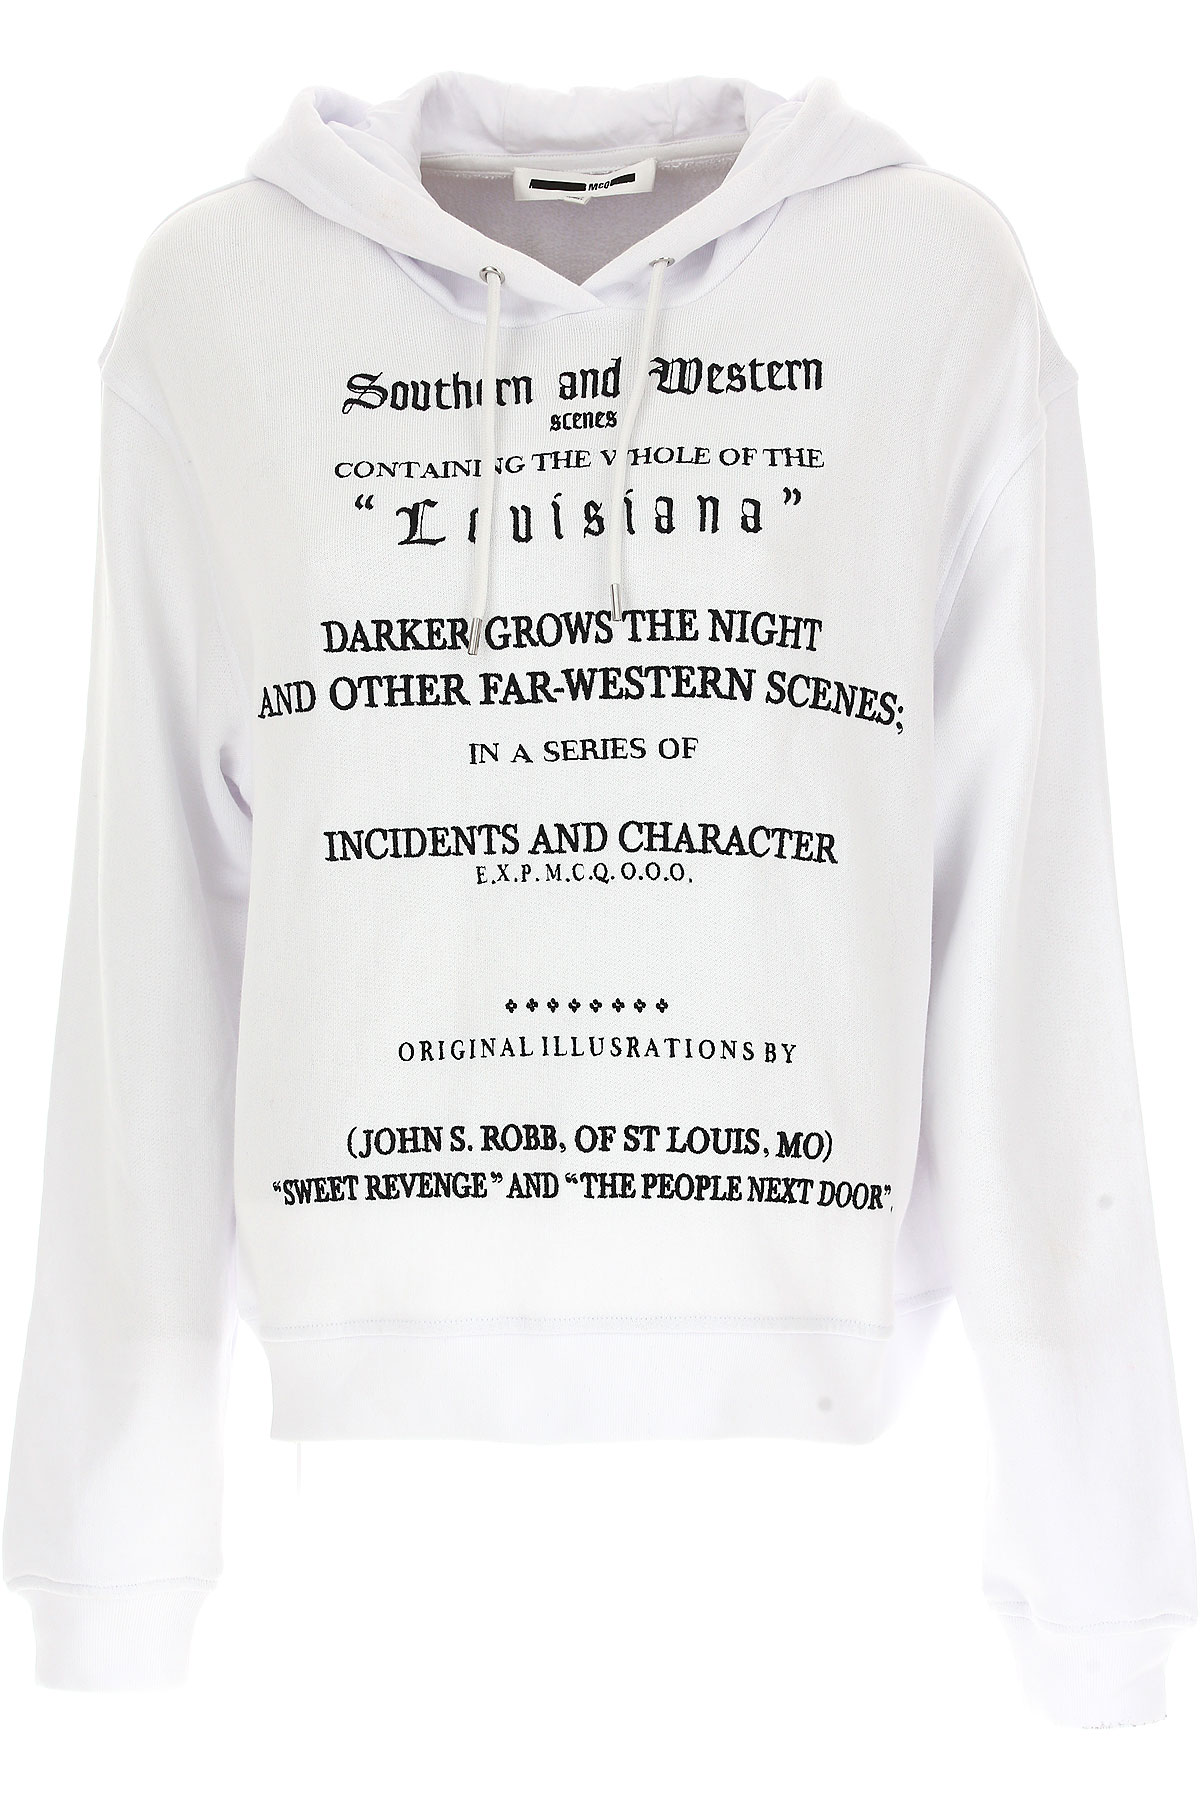 McQ Sweatshirt for Women , Blanc, Coton, 2017, 38 40 42